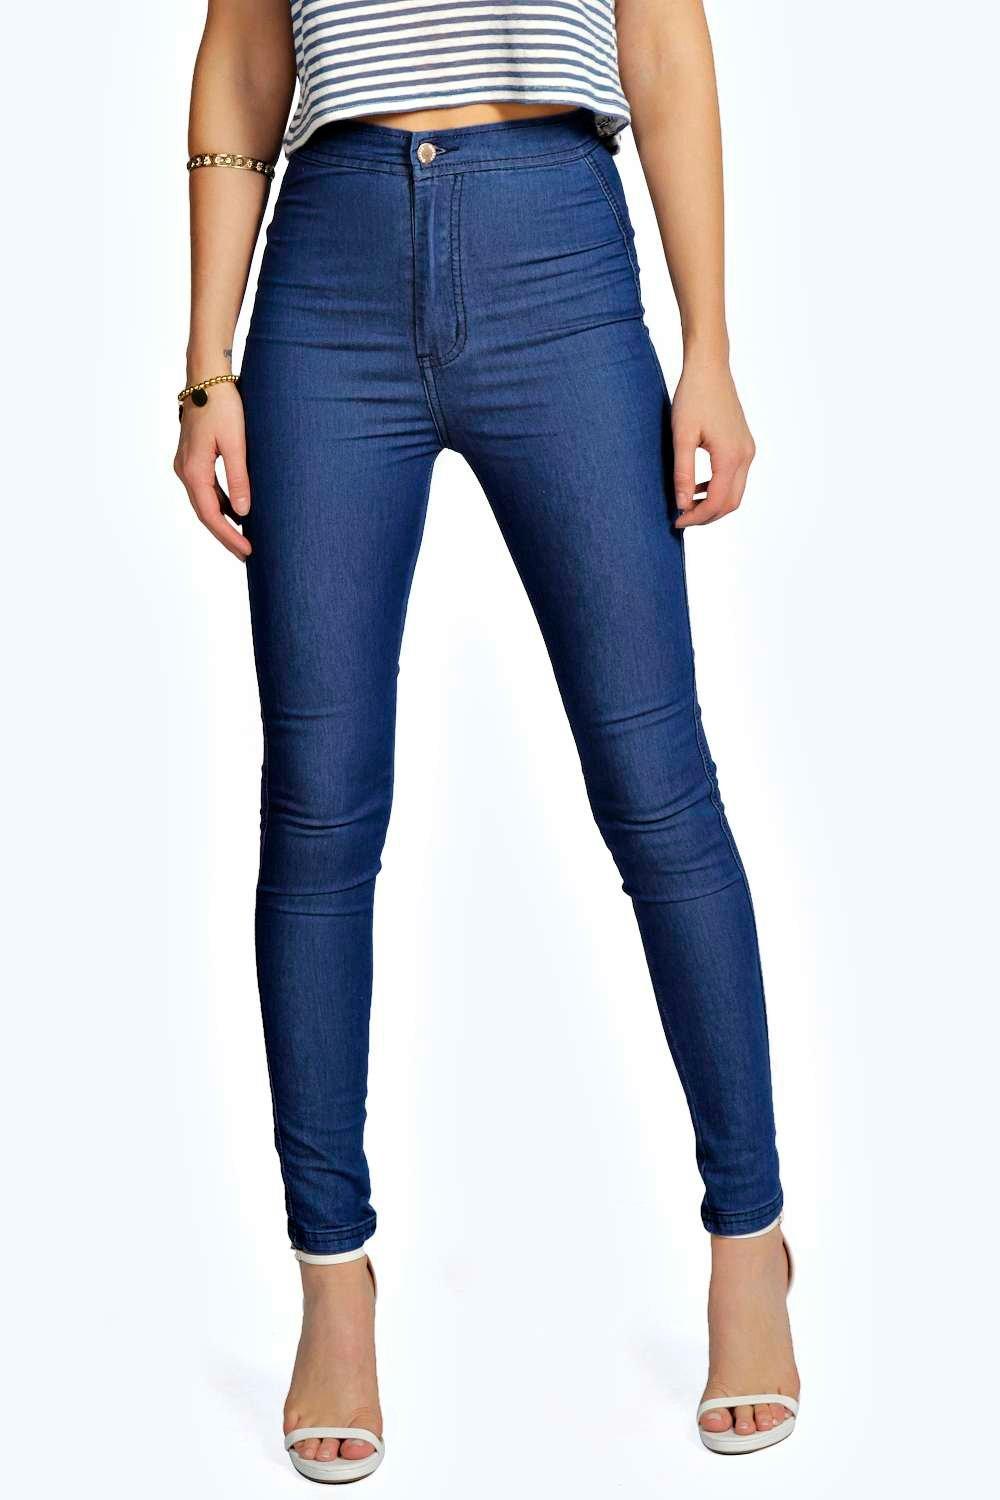 Macy High Waisted Skinny Jeans at boohoo.com